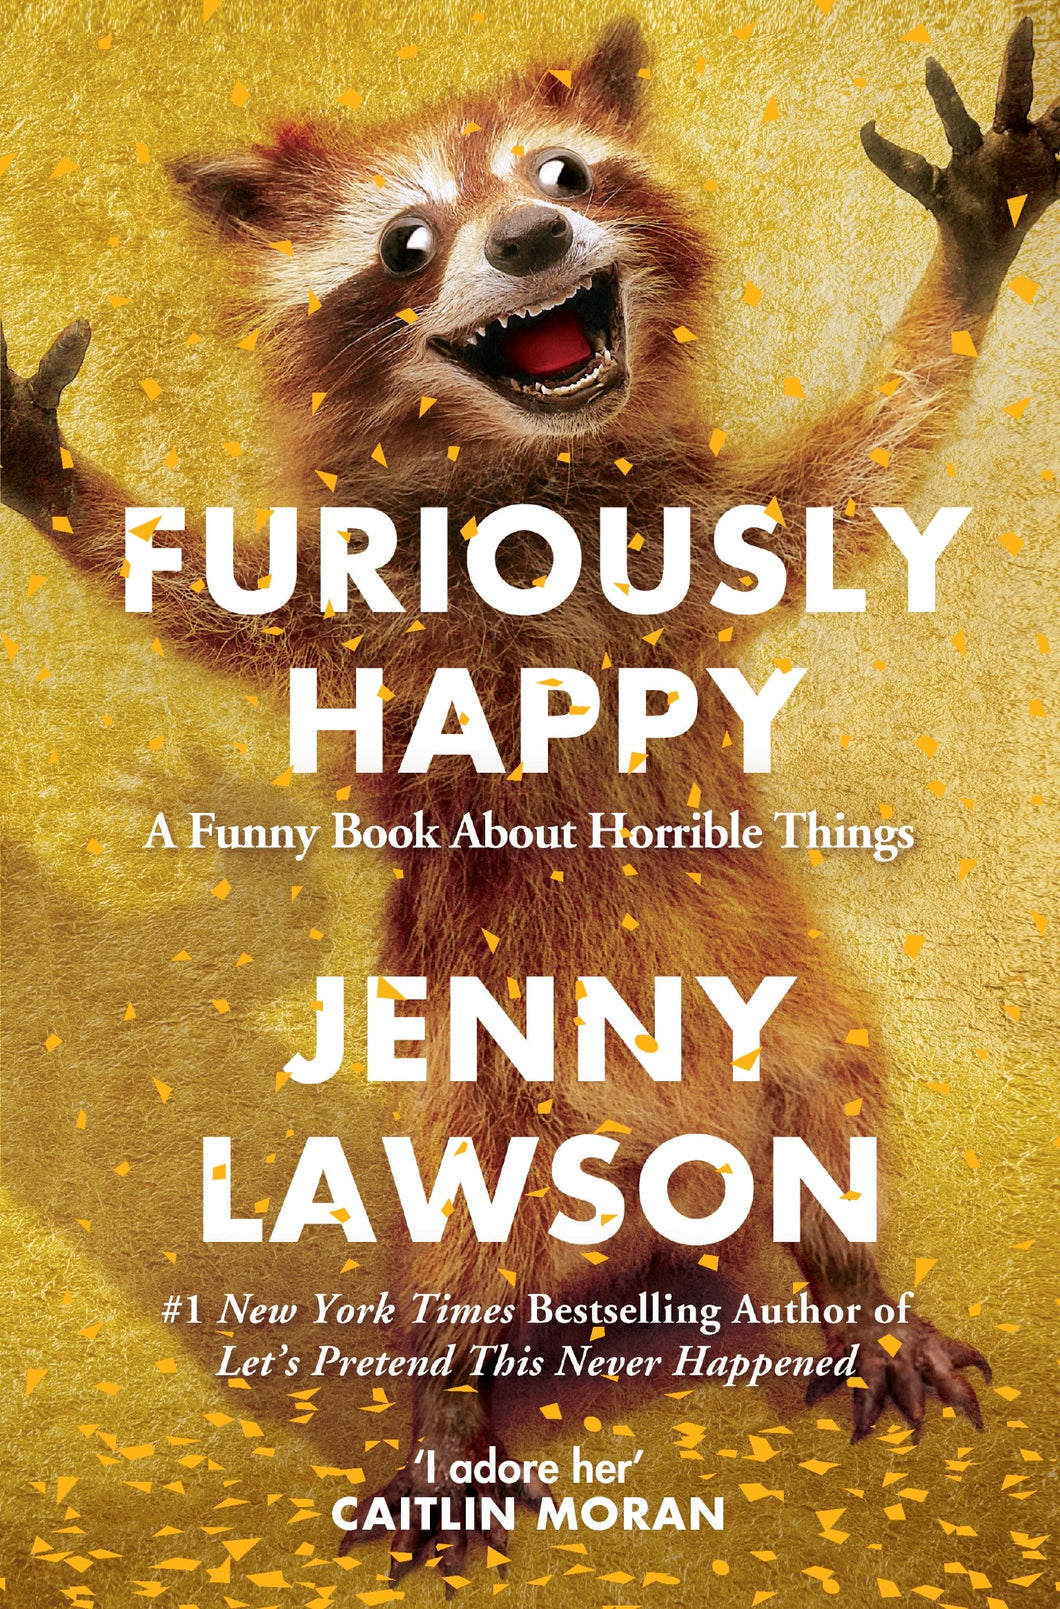 Furiously Happy, Jenny Lawson